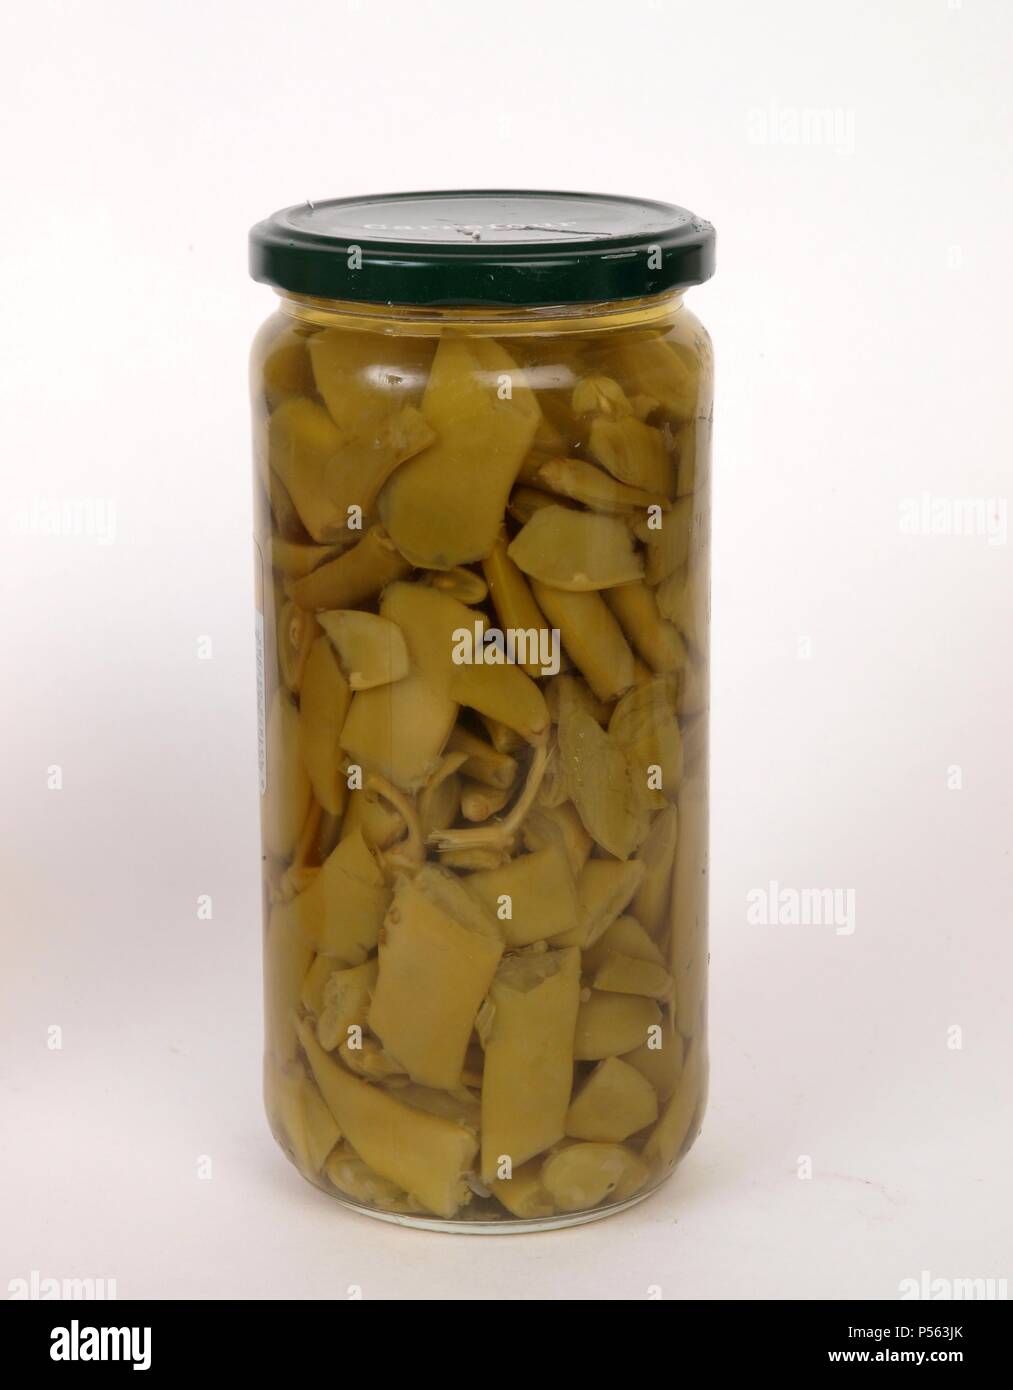 JUDIAS VERDES conservada en envase de cristal Stock Photo - Alamy